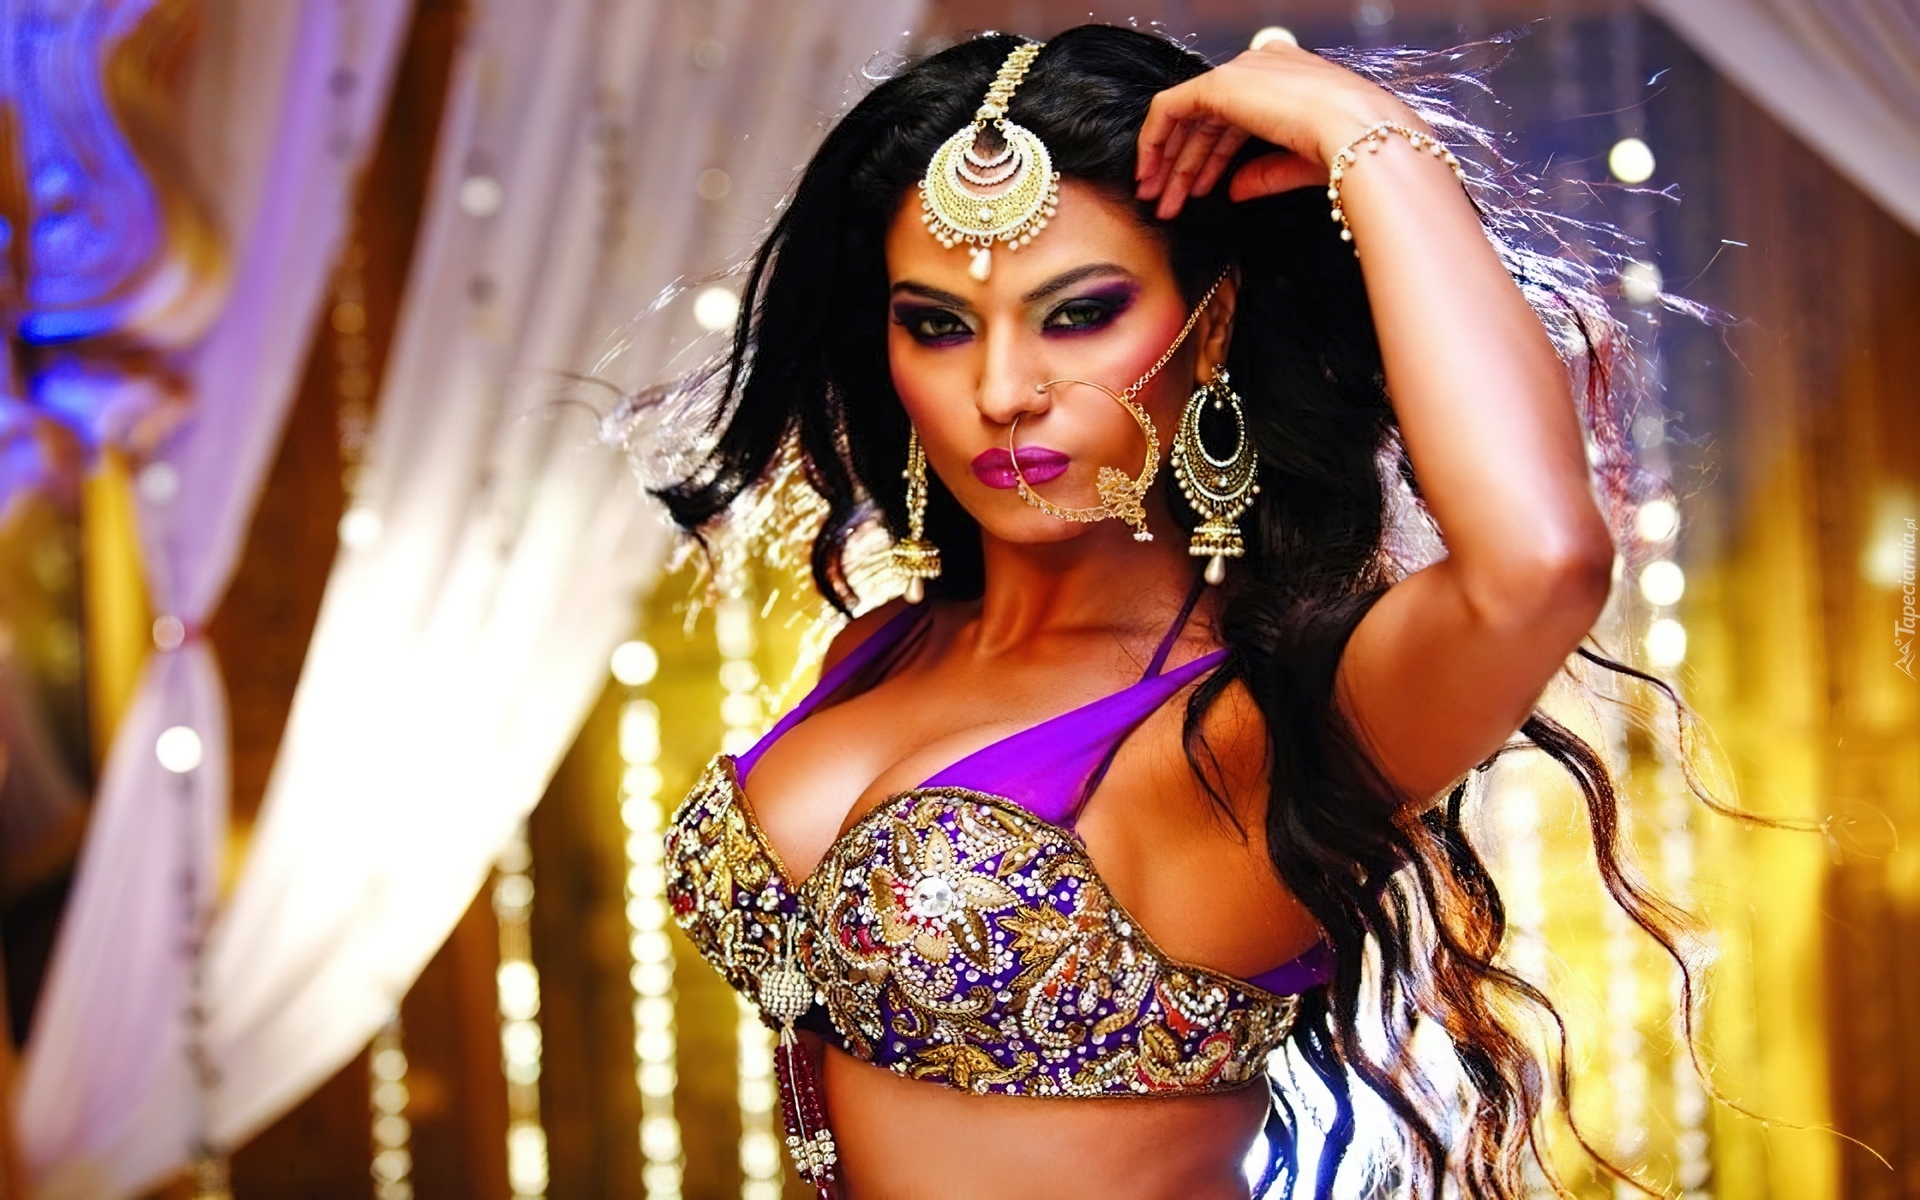 Venna Malik, Hinduska, Aktorka, Ozdoby